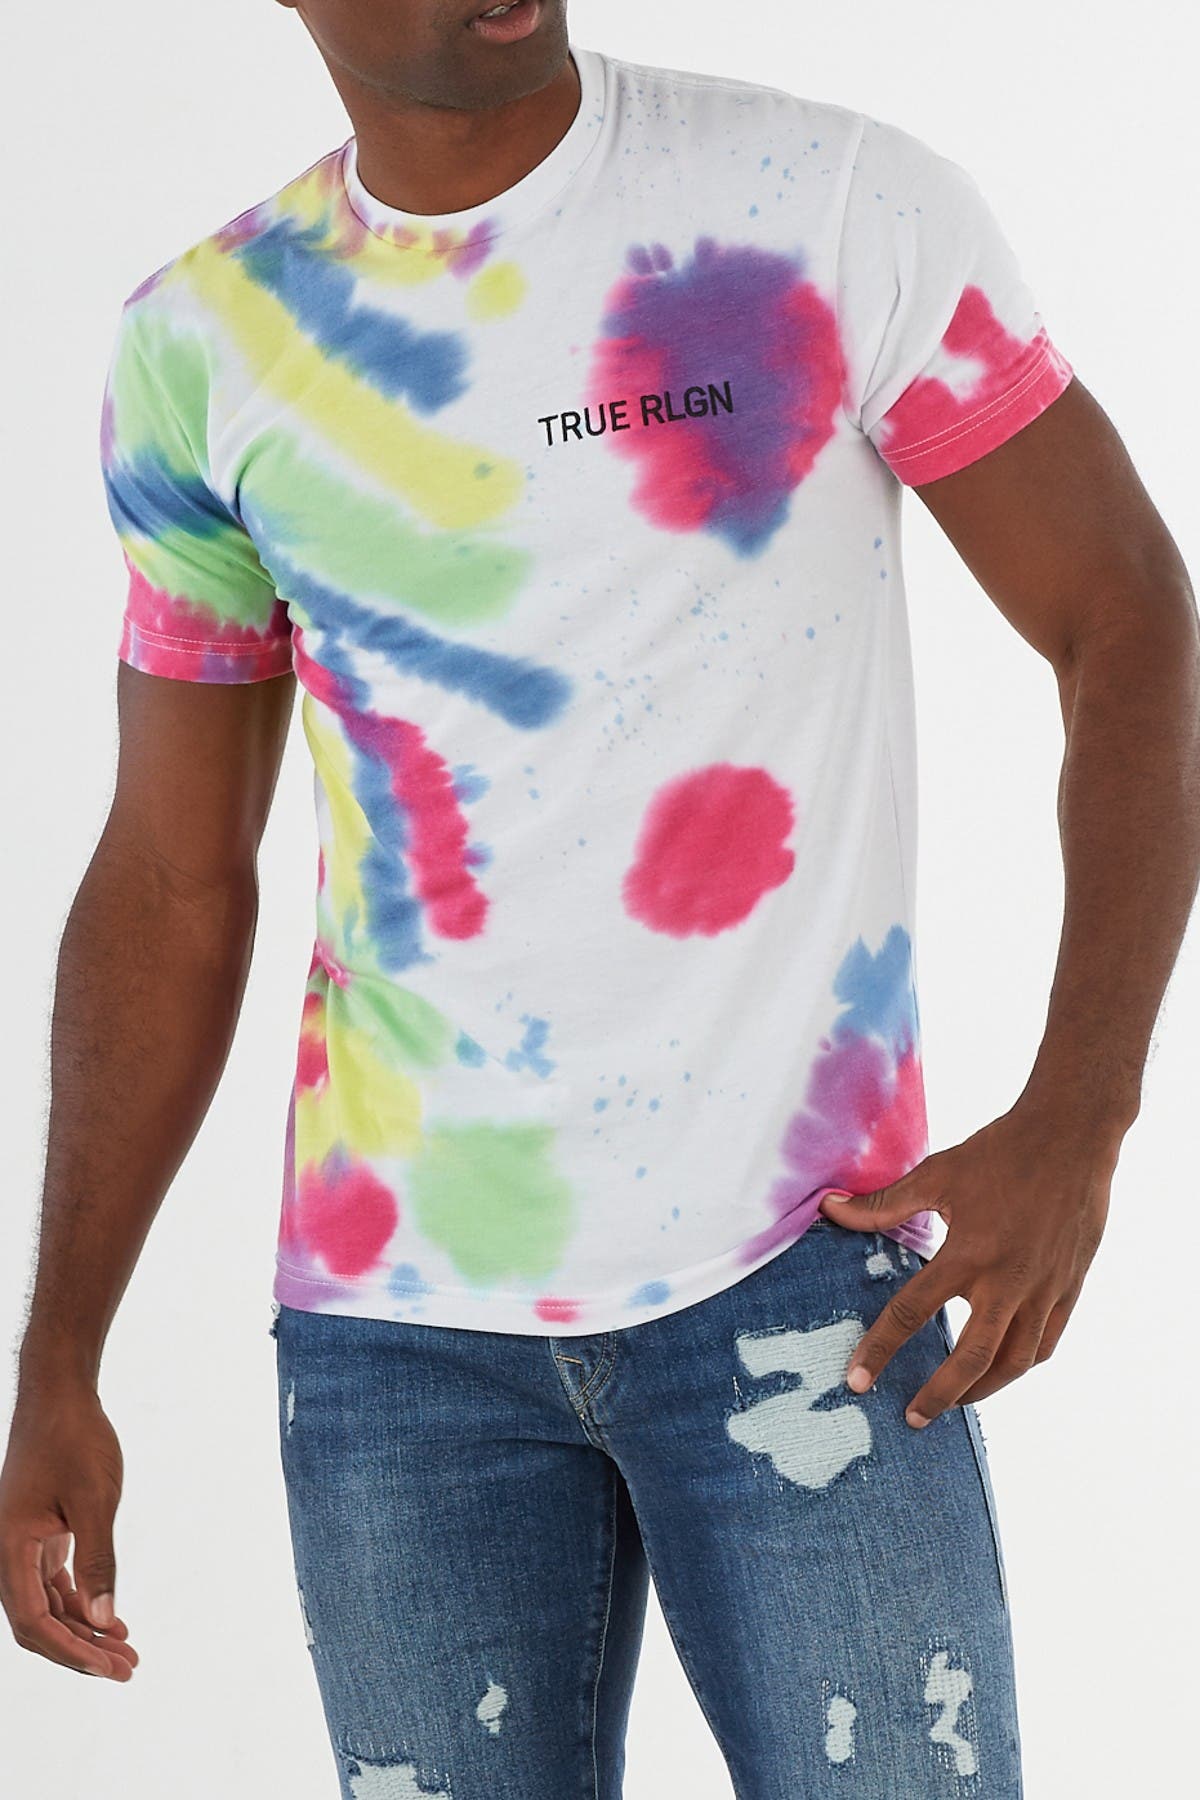 true religion tie dye shirt